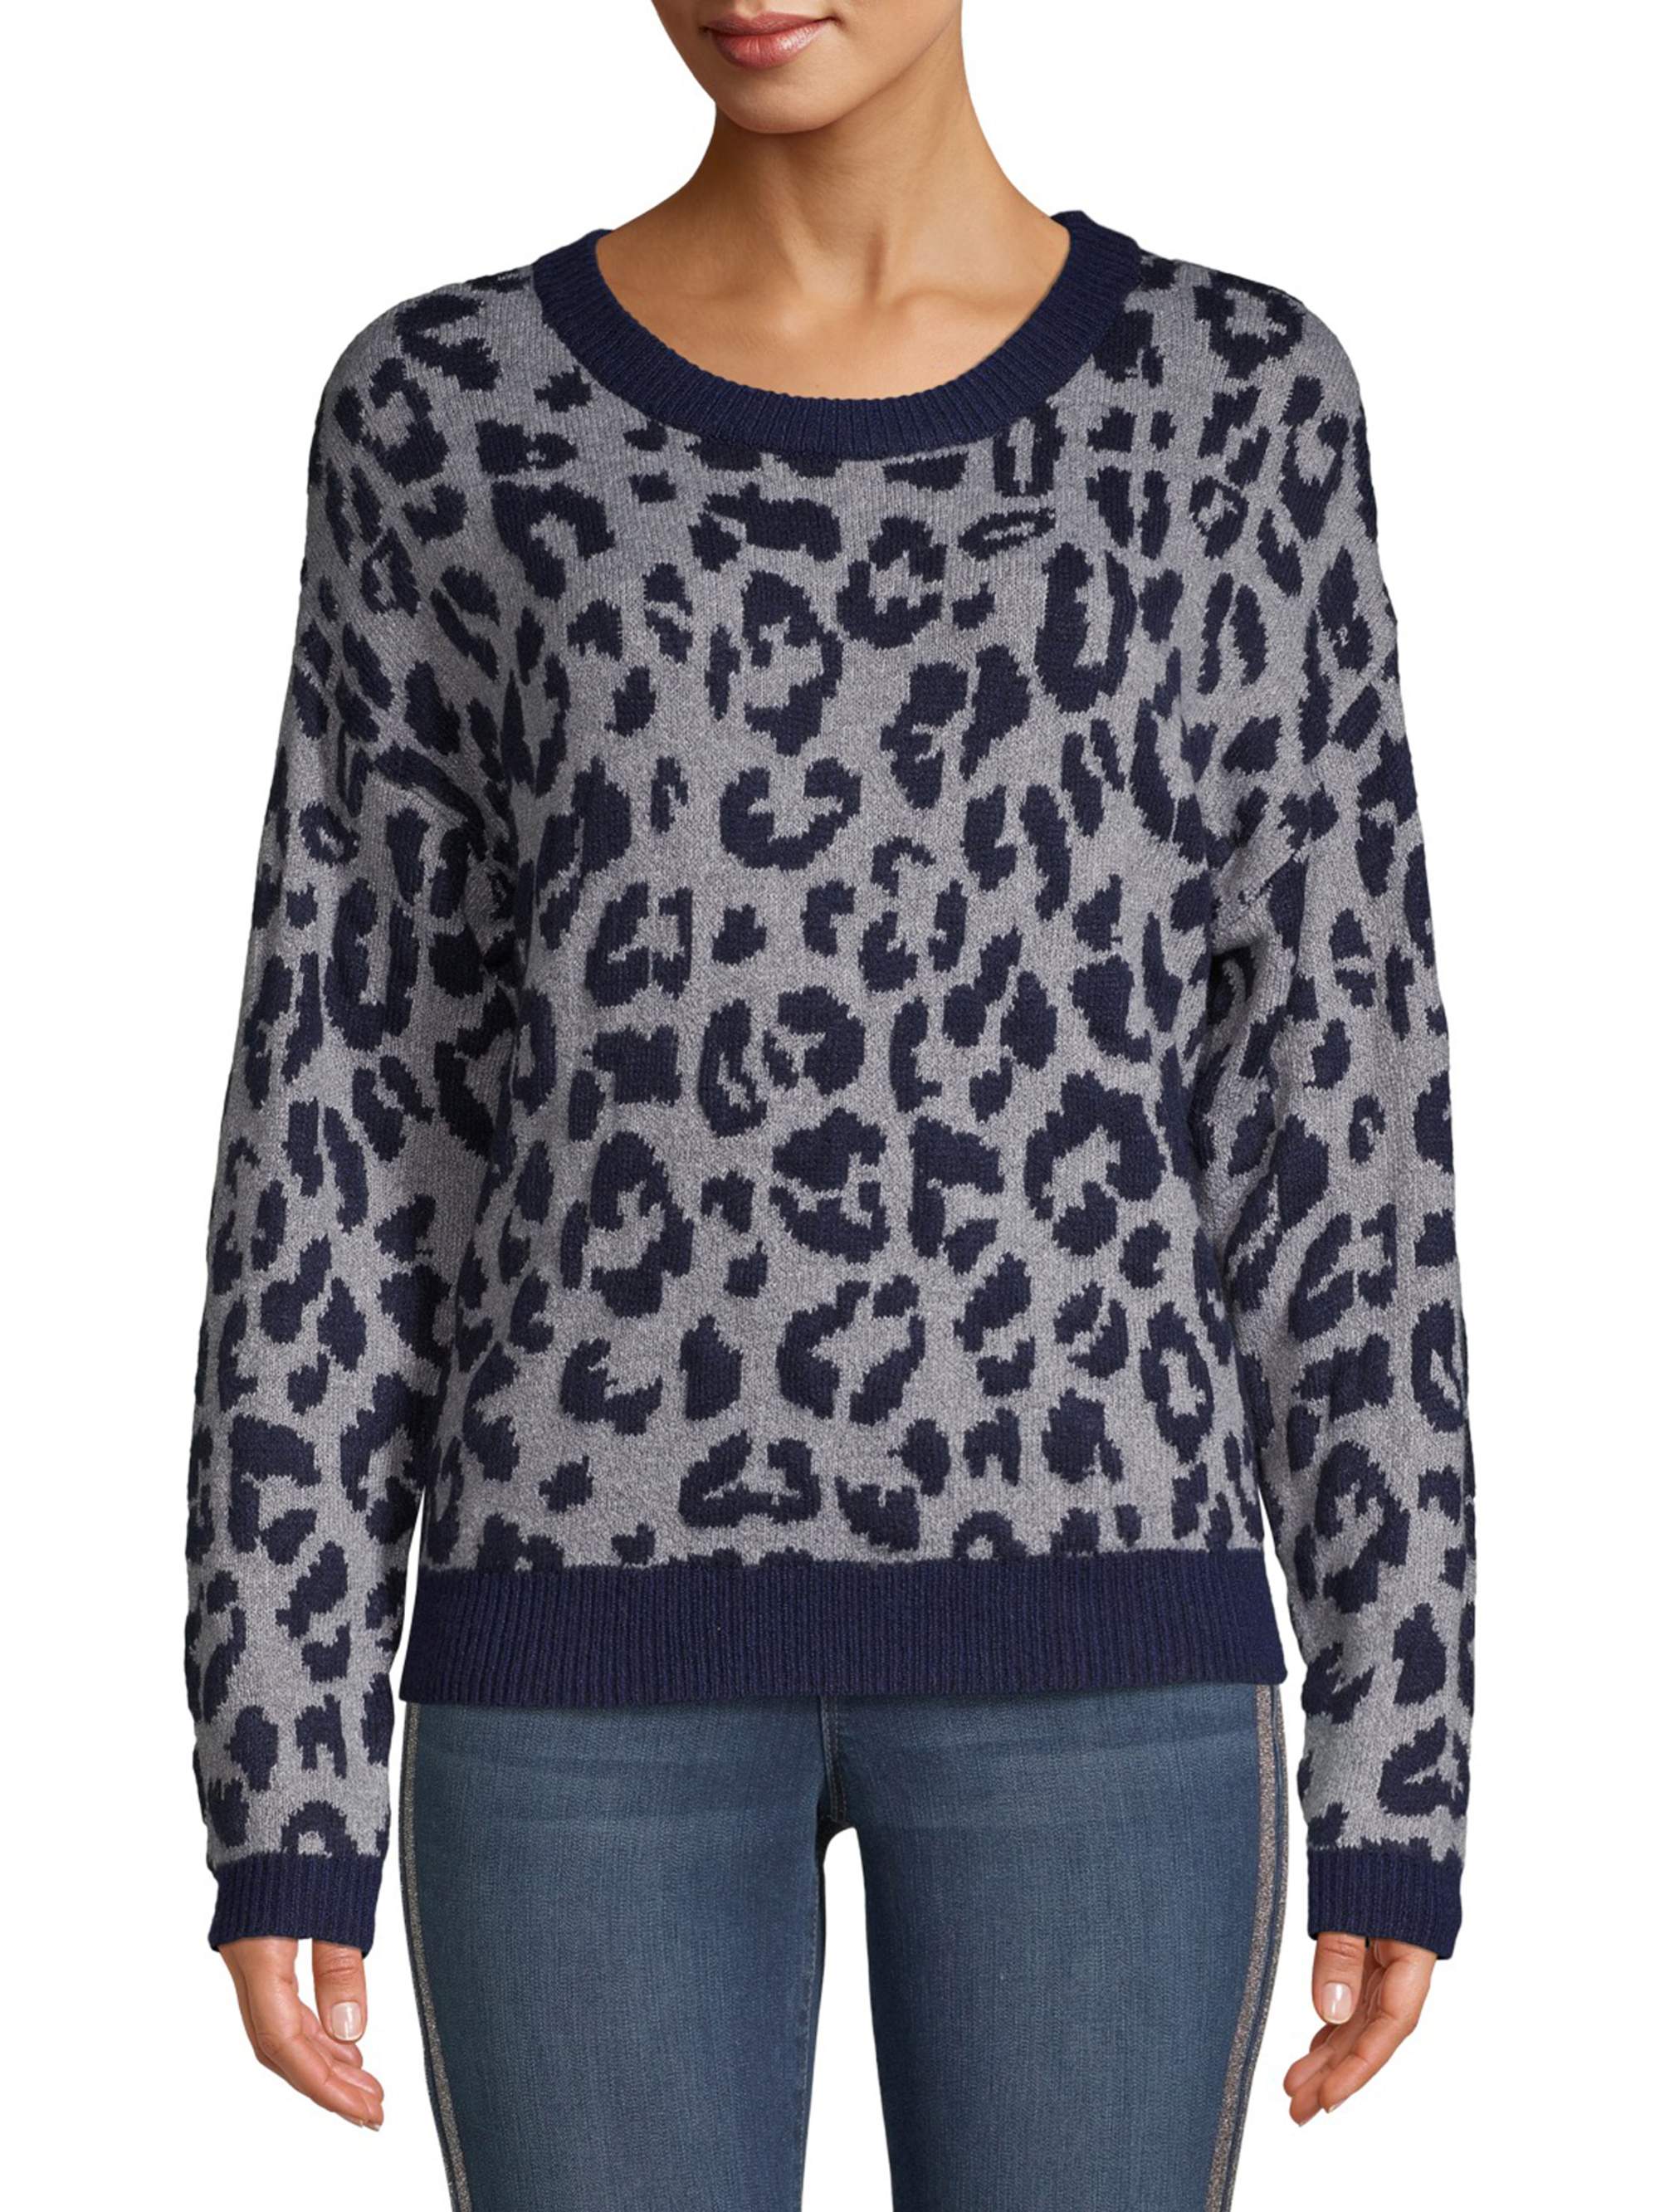 navy-leopard-print-sweater